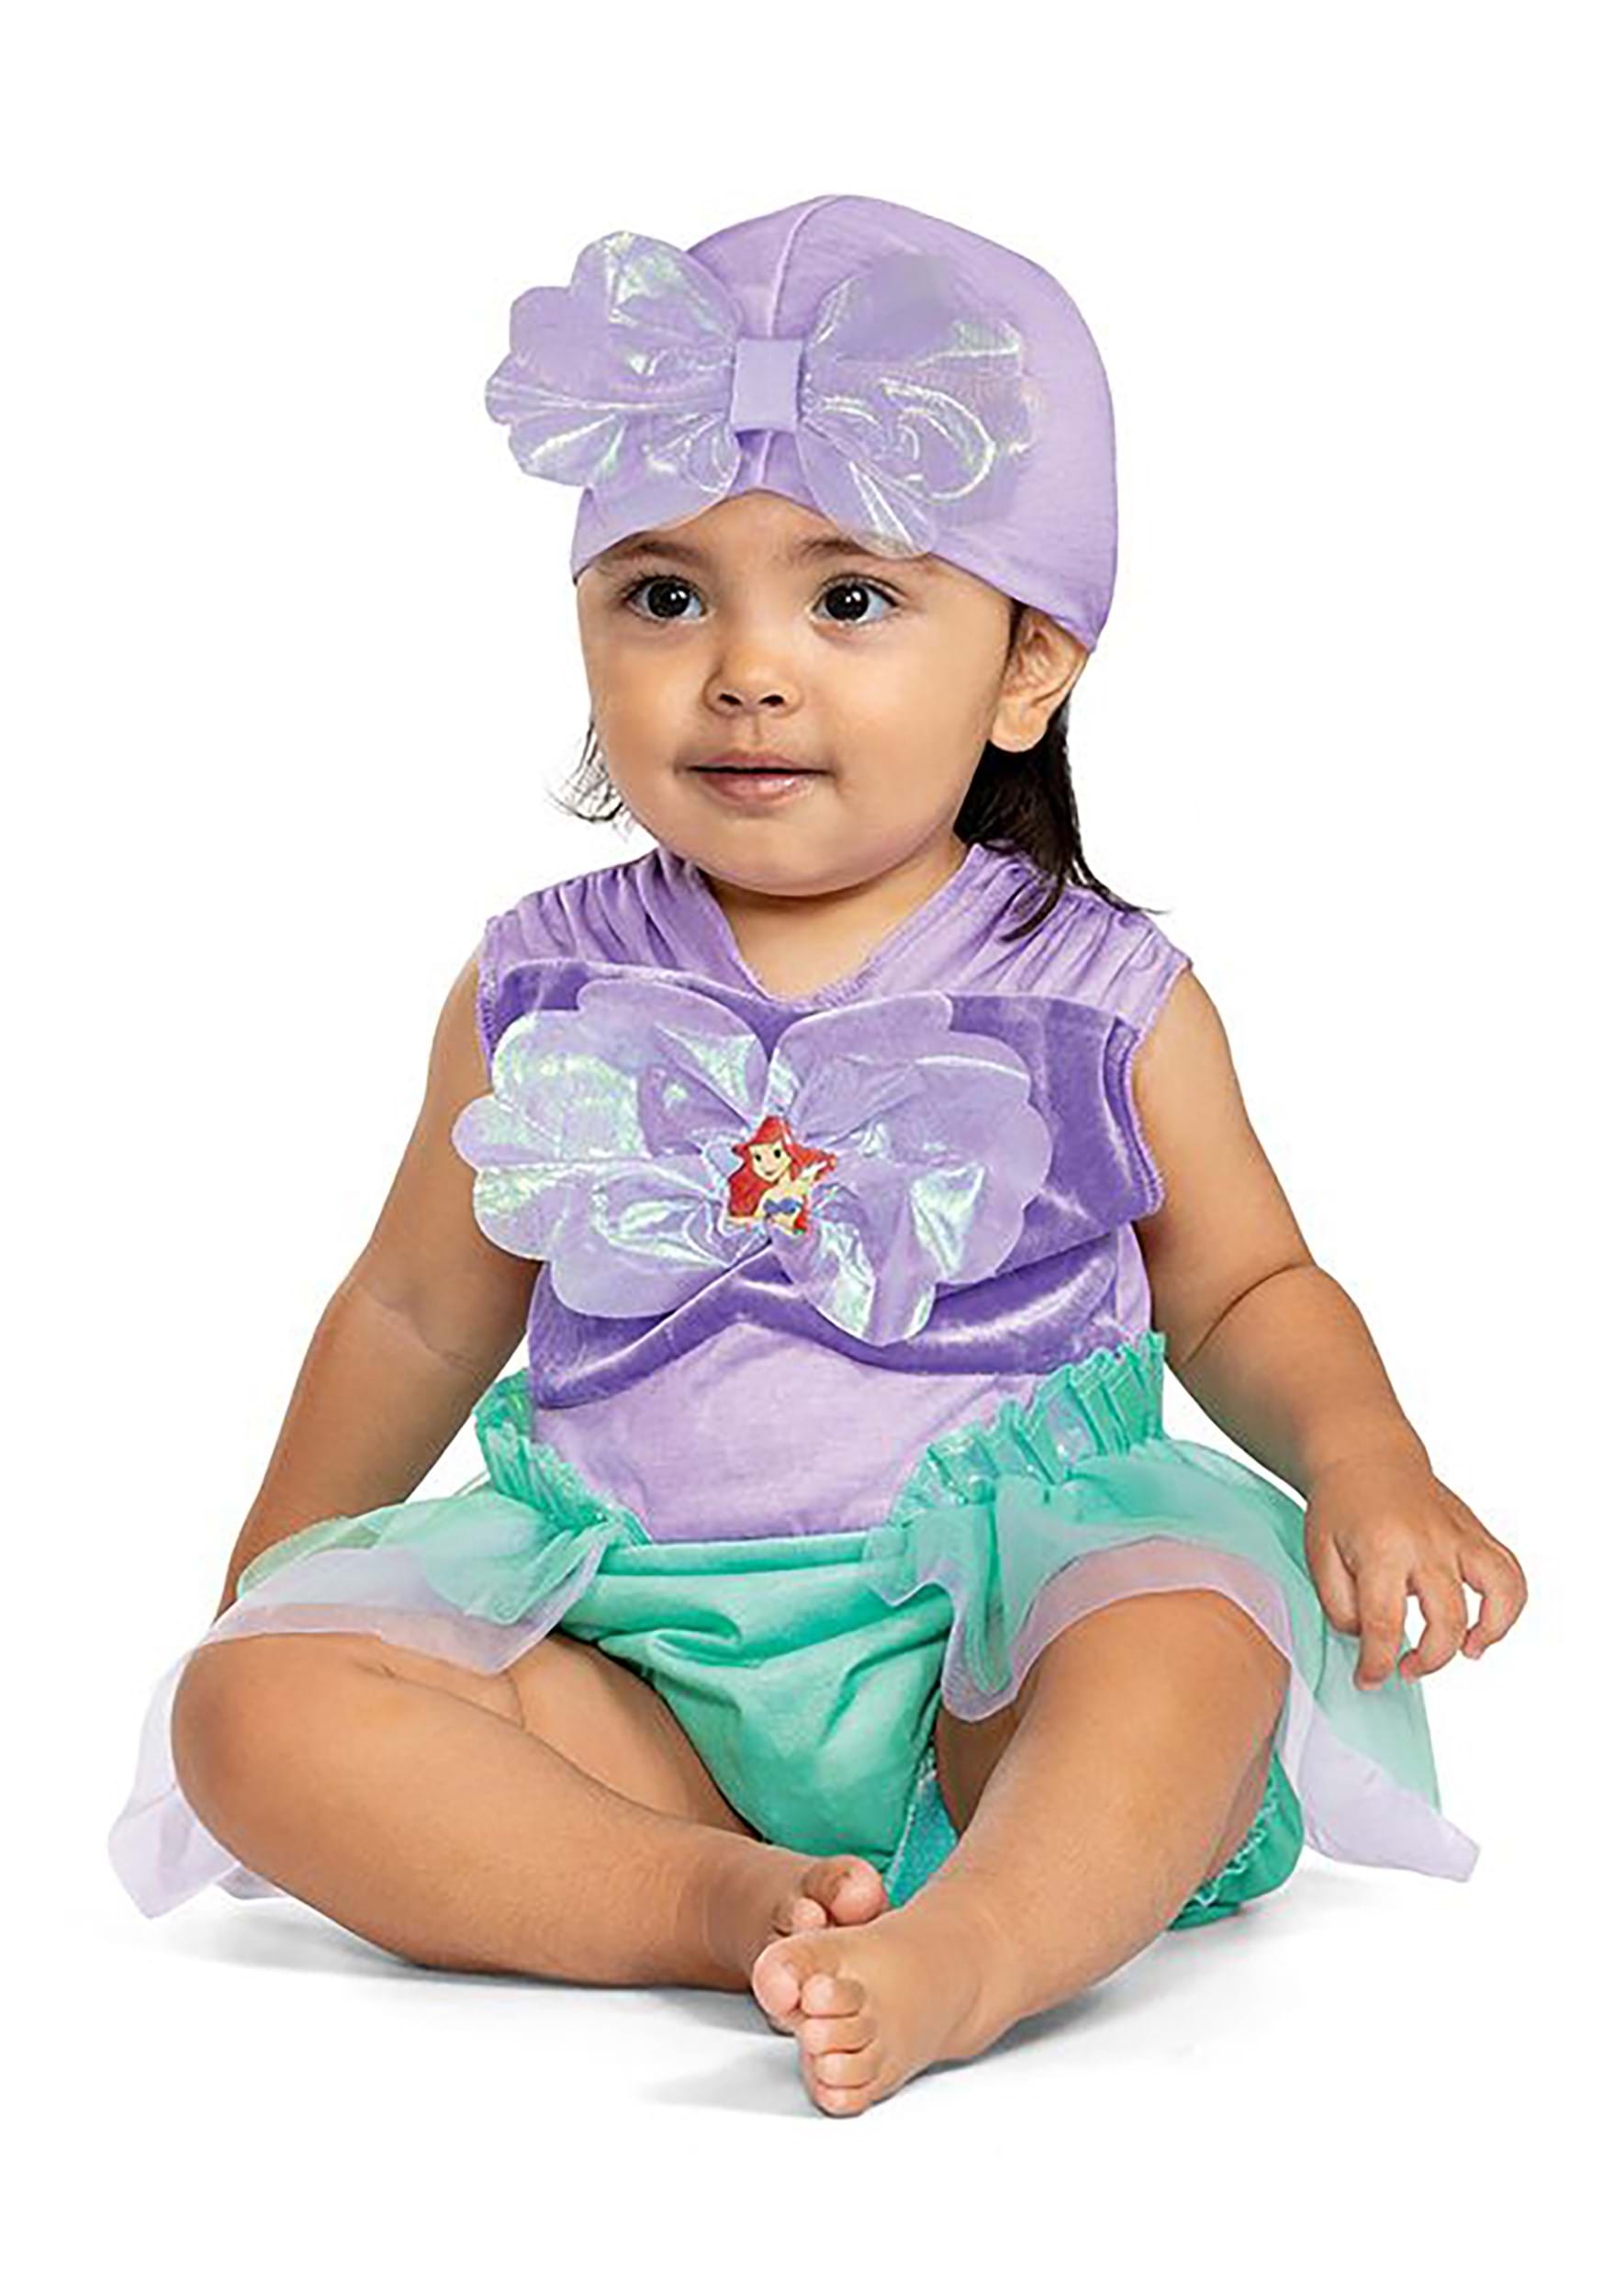 The Little Mermaid Posh Ariel Costume for Infants | Ariel Costume